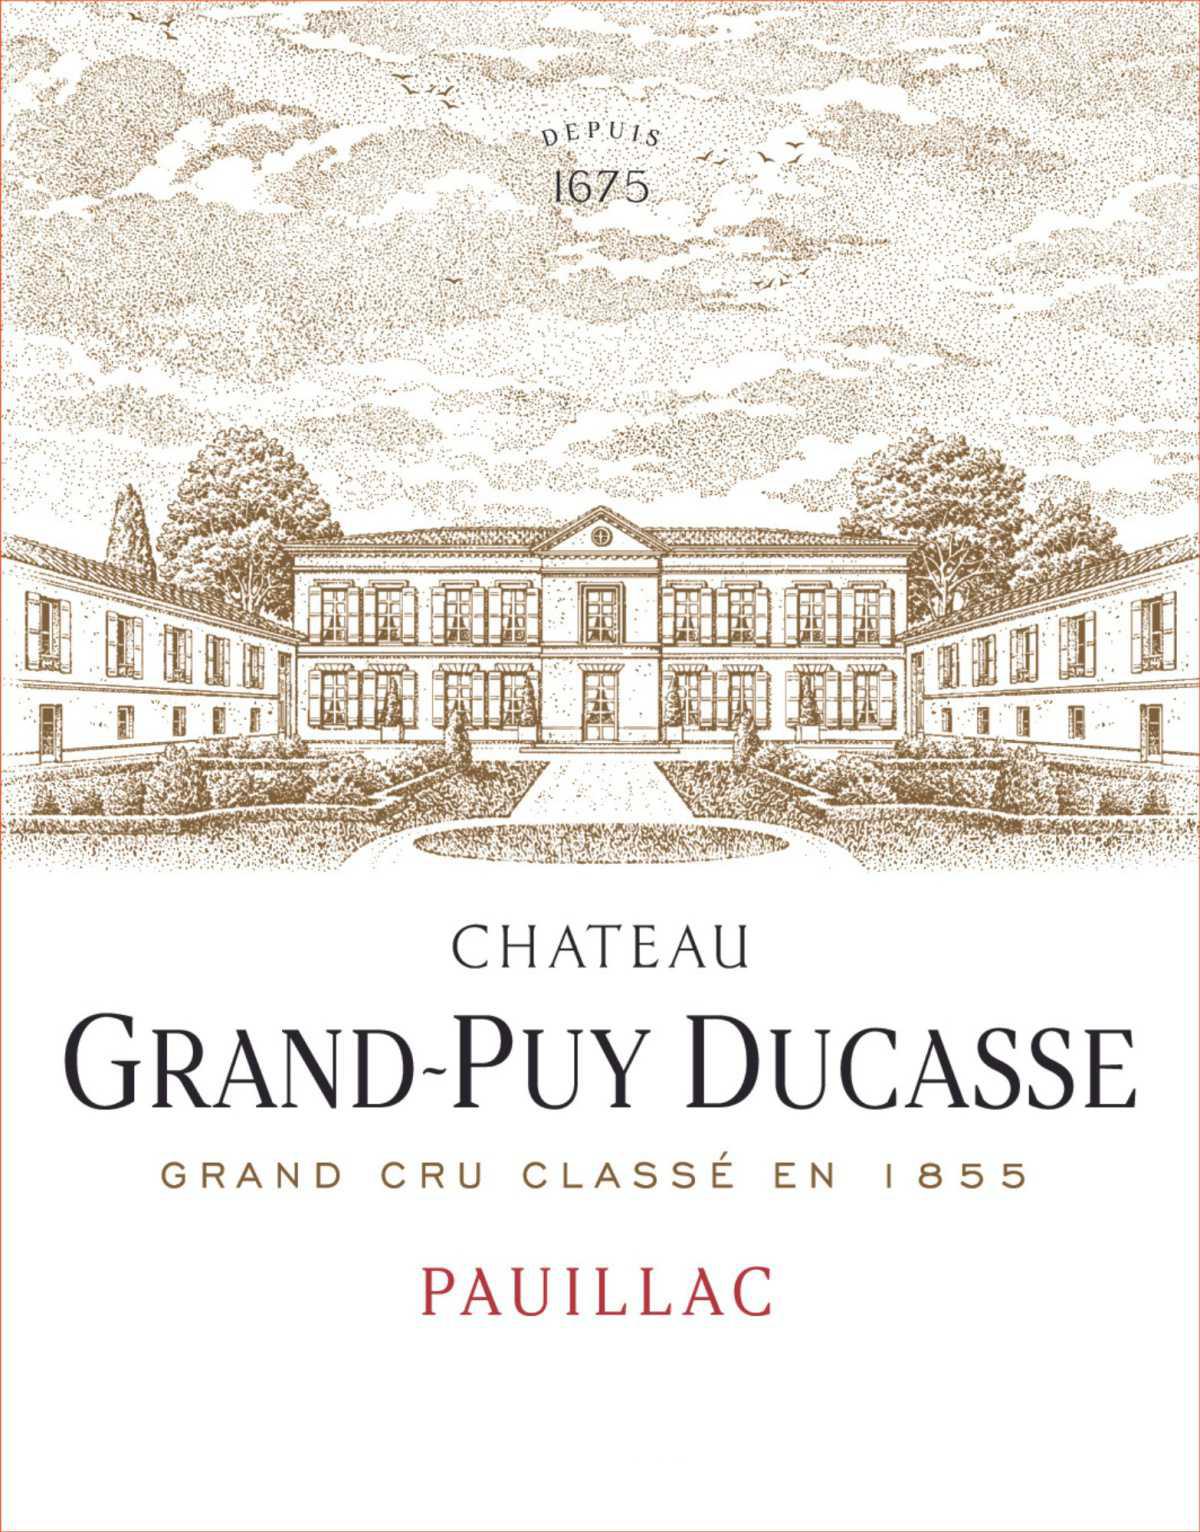 Château Grand-Puy Ducasse